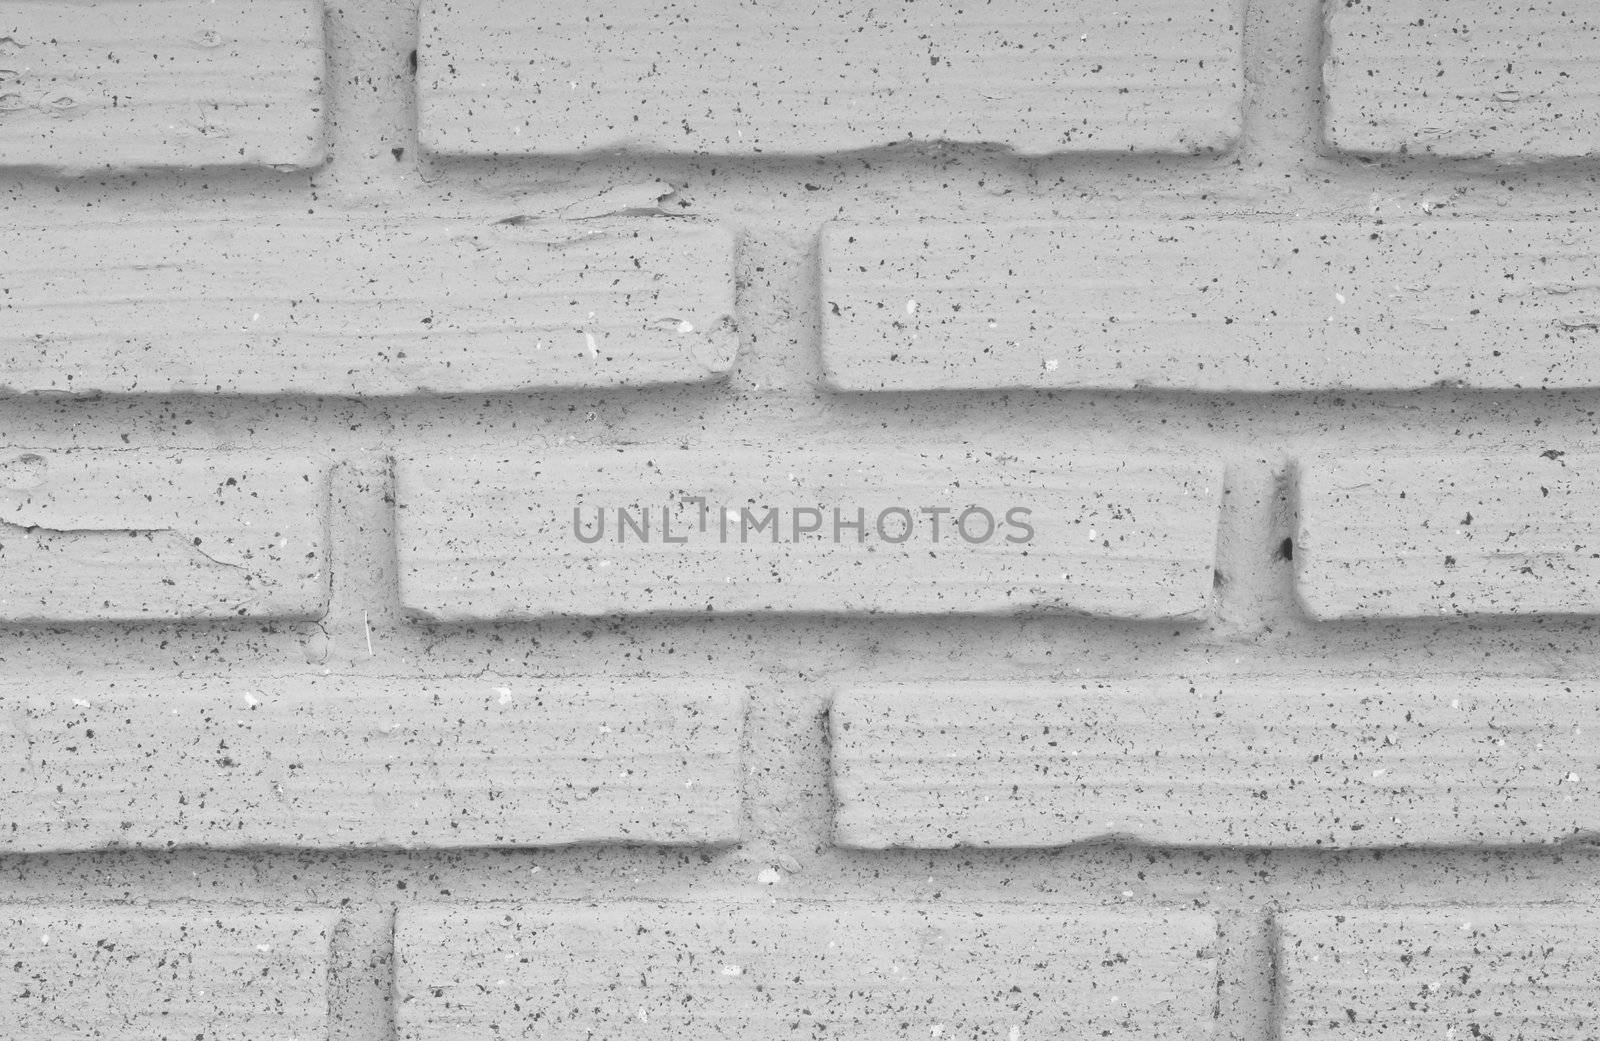 gray brick wall texture background